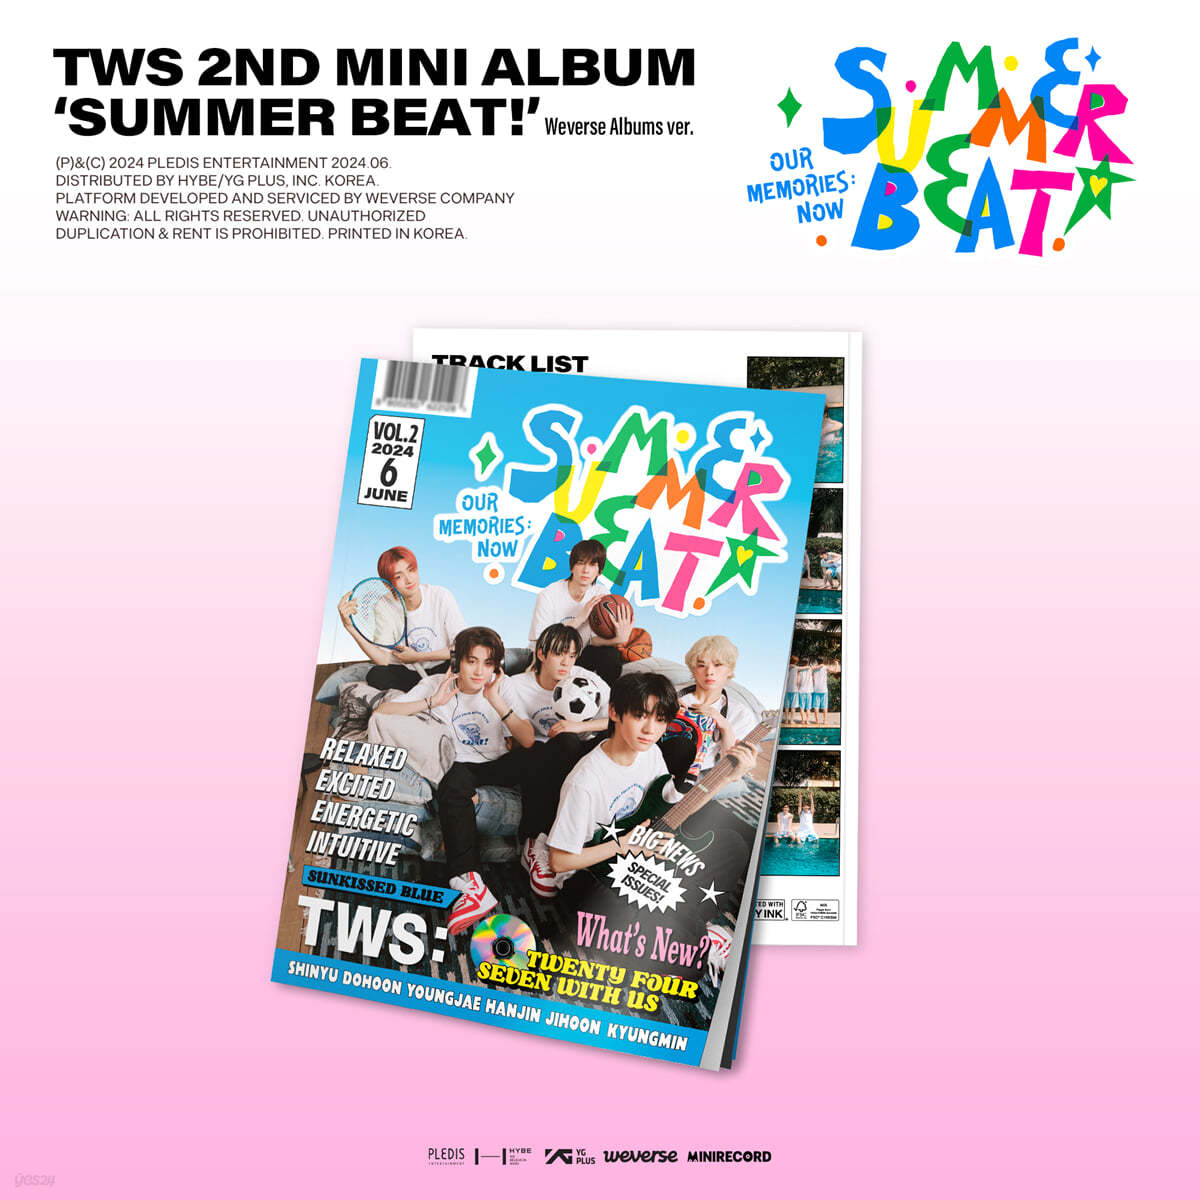 TWS (투어스) - 2nd Mini Album 'SUMMER BEAT!' [Weverse Albums ver.]